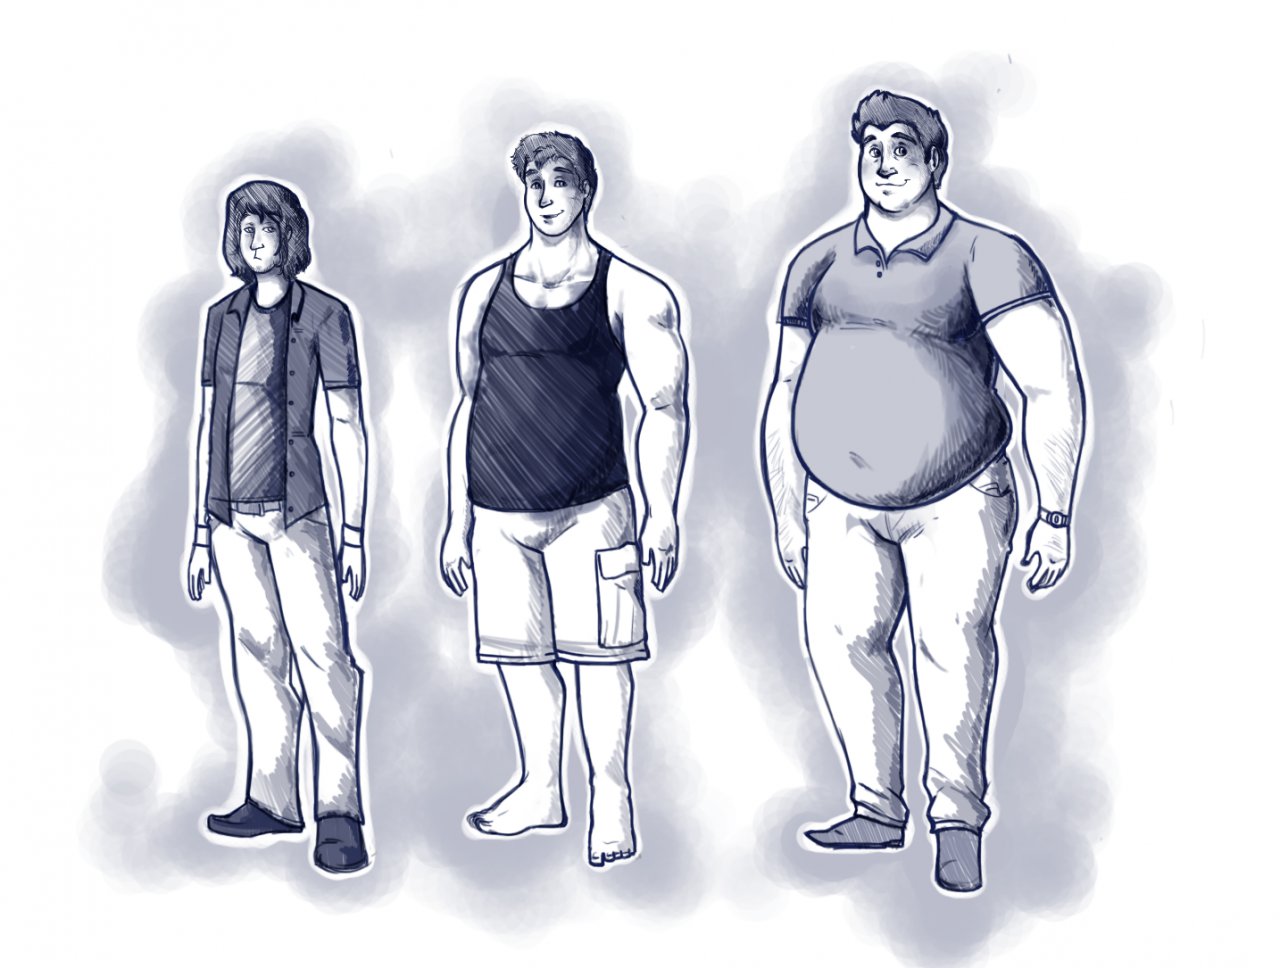 male weight gain progression